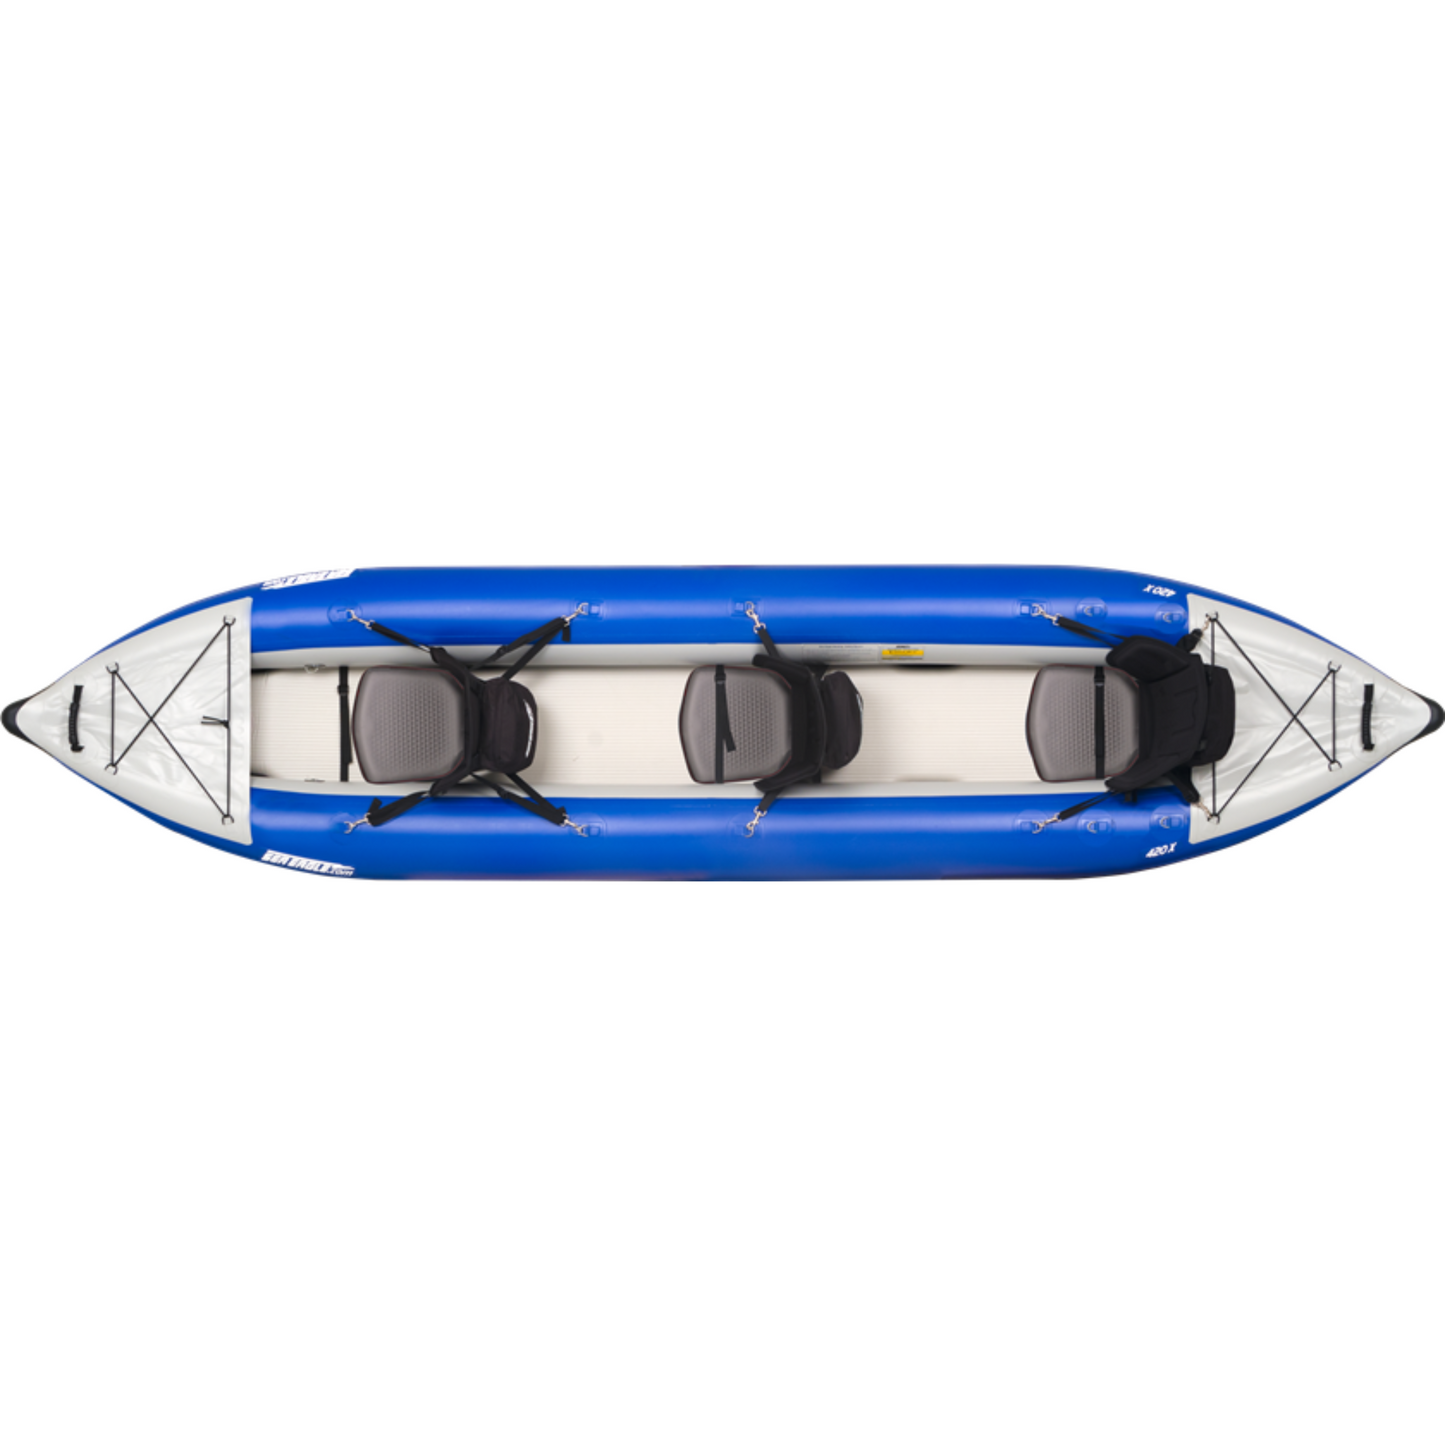 Sea Eagle 420x Explorer Pro Kayak Package